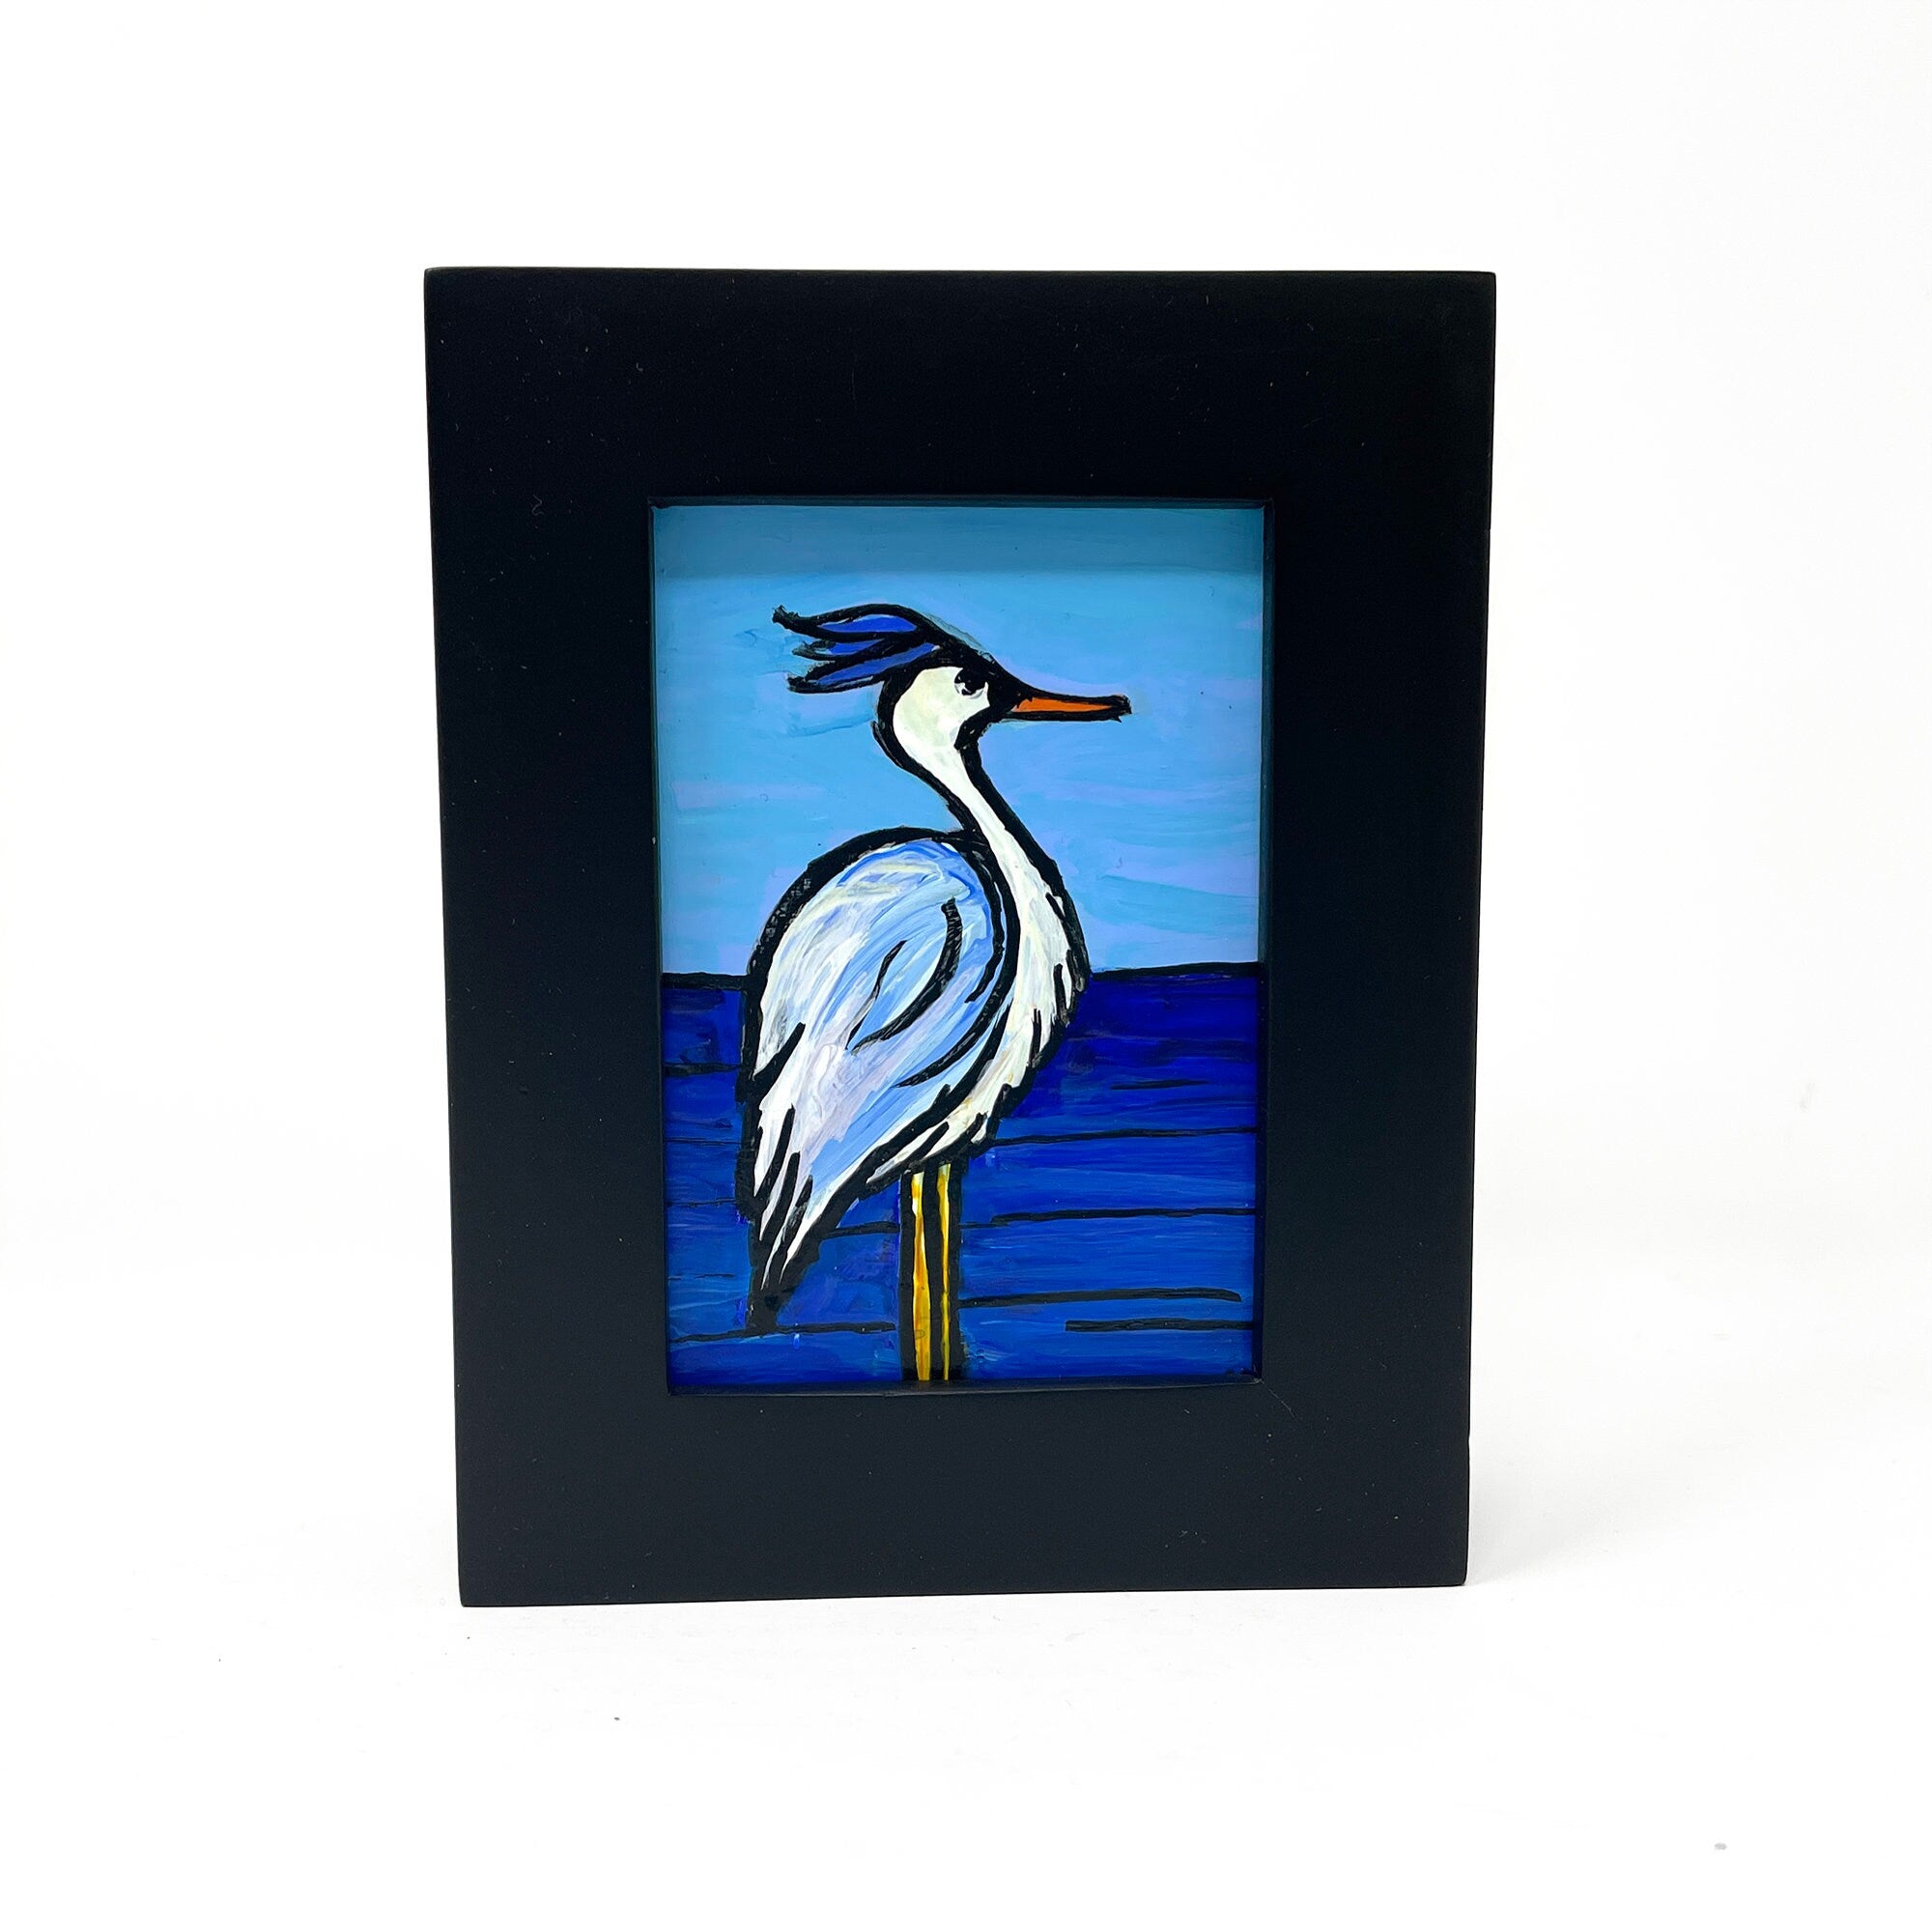 Small Great Blue Heron Art - Framed Mini Painting - Wetlands Bird - Wading Bird - Waterbird - Original Small Acrylic Painting